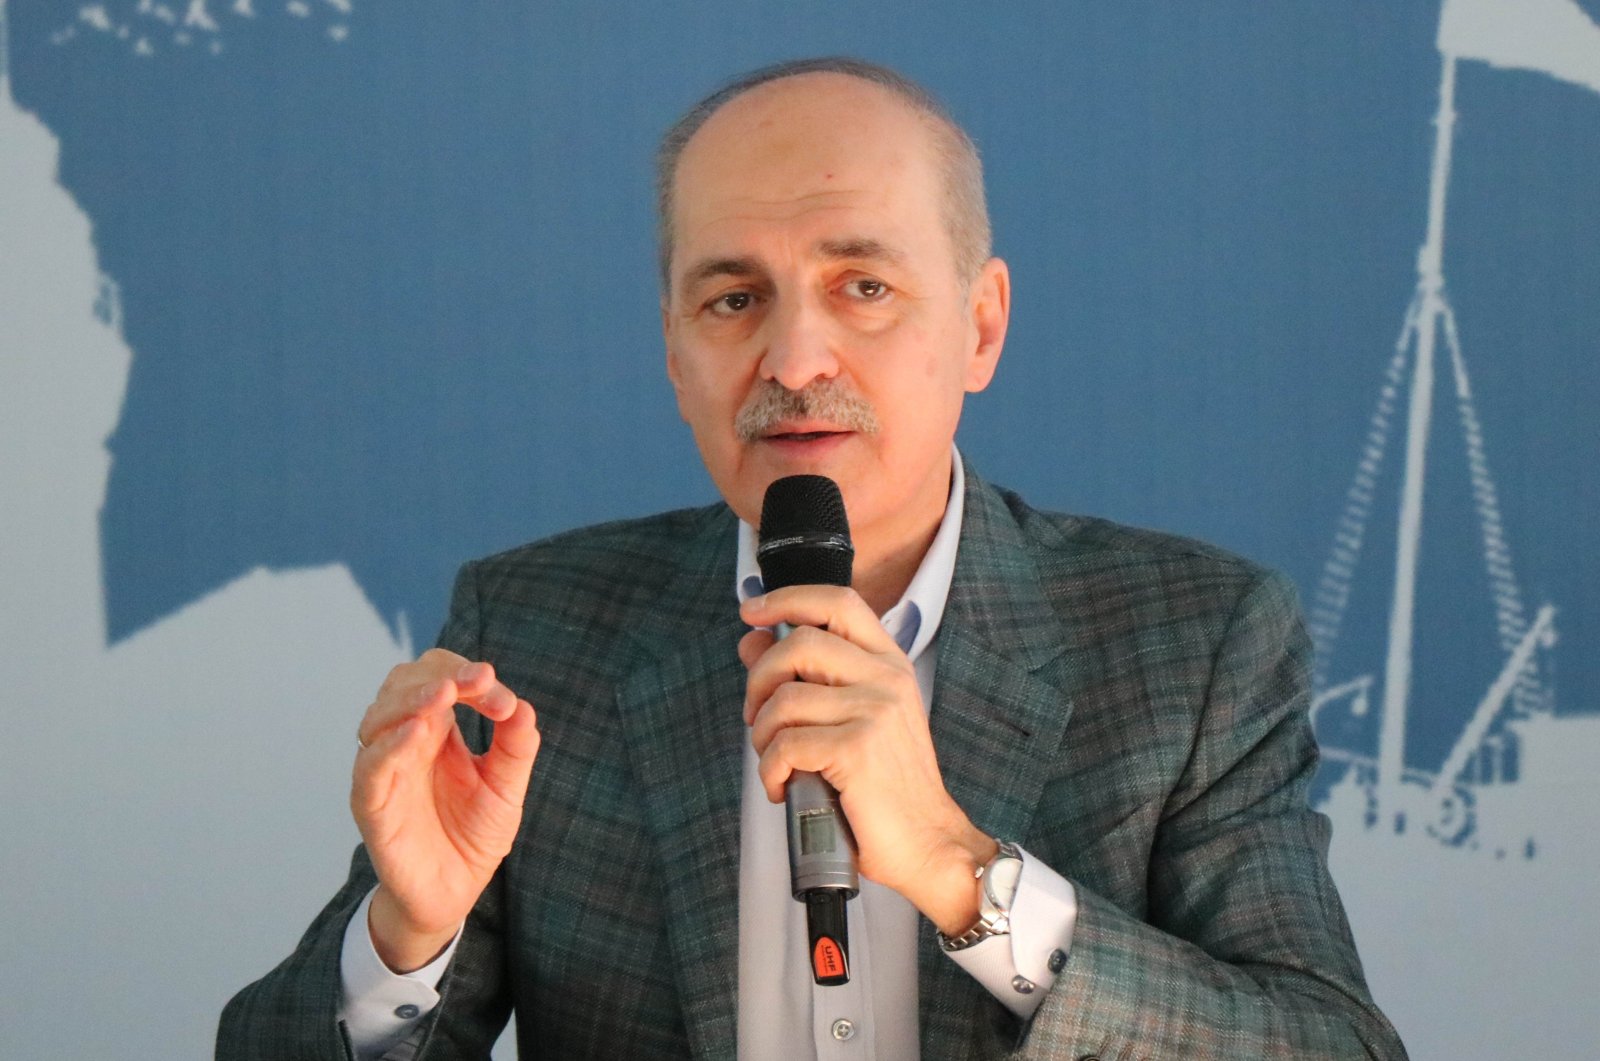 Türkiye’s ruling Justice and Development Party (AK Party) Deputy Chair Numan Kurtulmuş speaks at an event in the northern province of Samsun, Türkiye, Jan. 22, 2023. (IHA Photo)